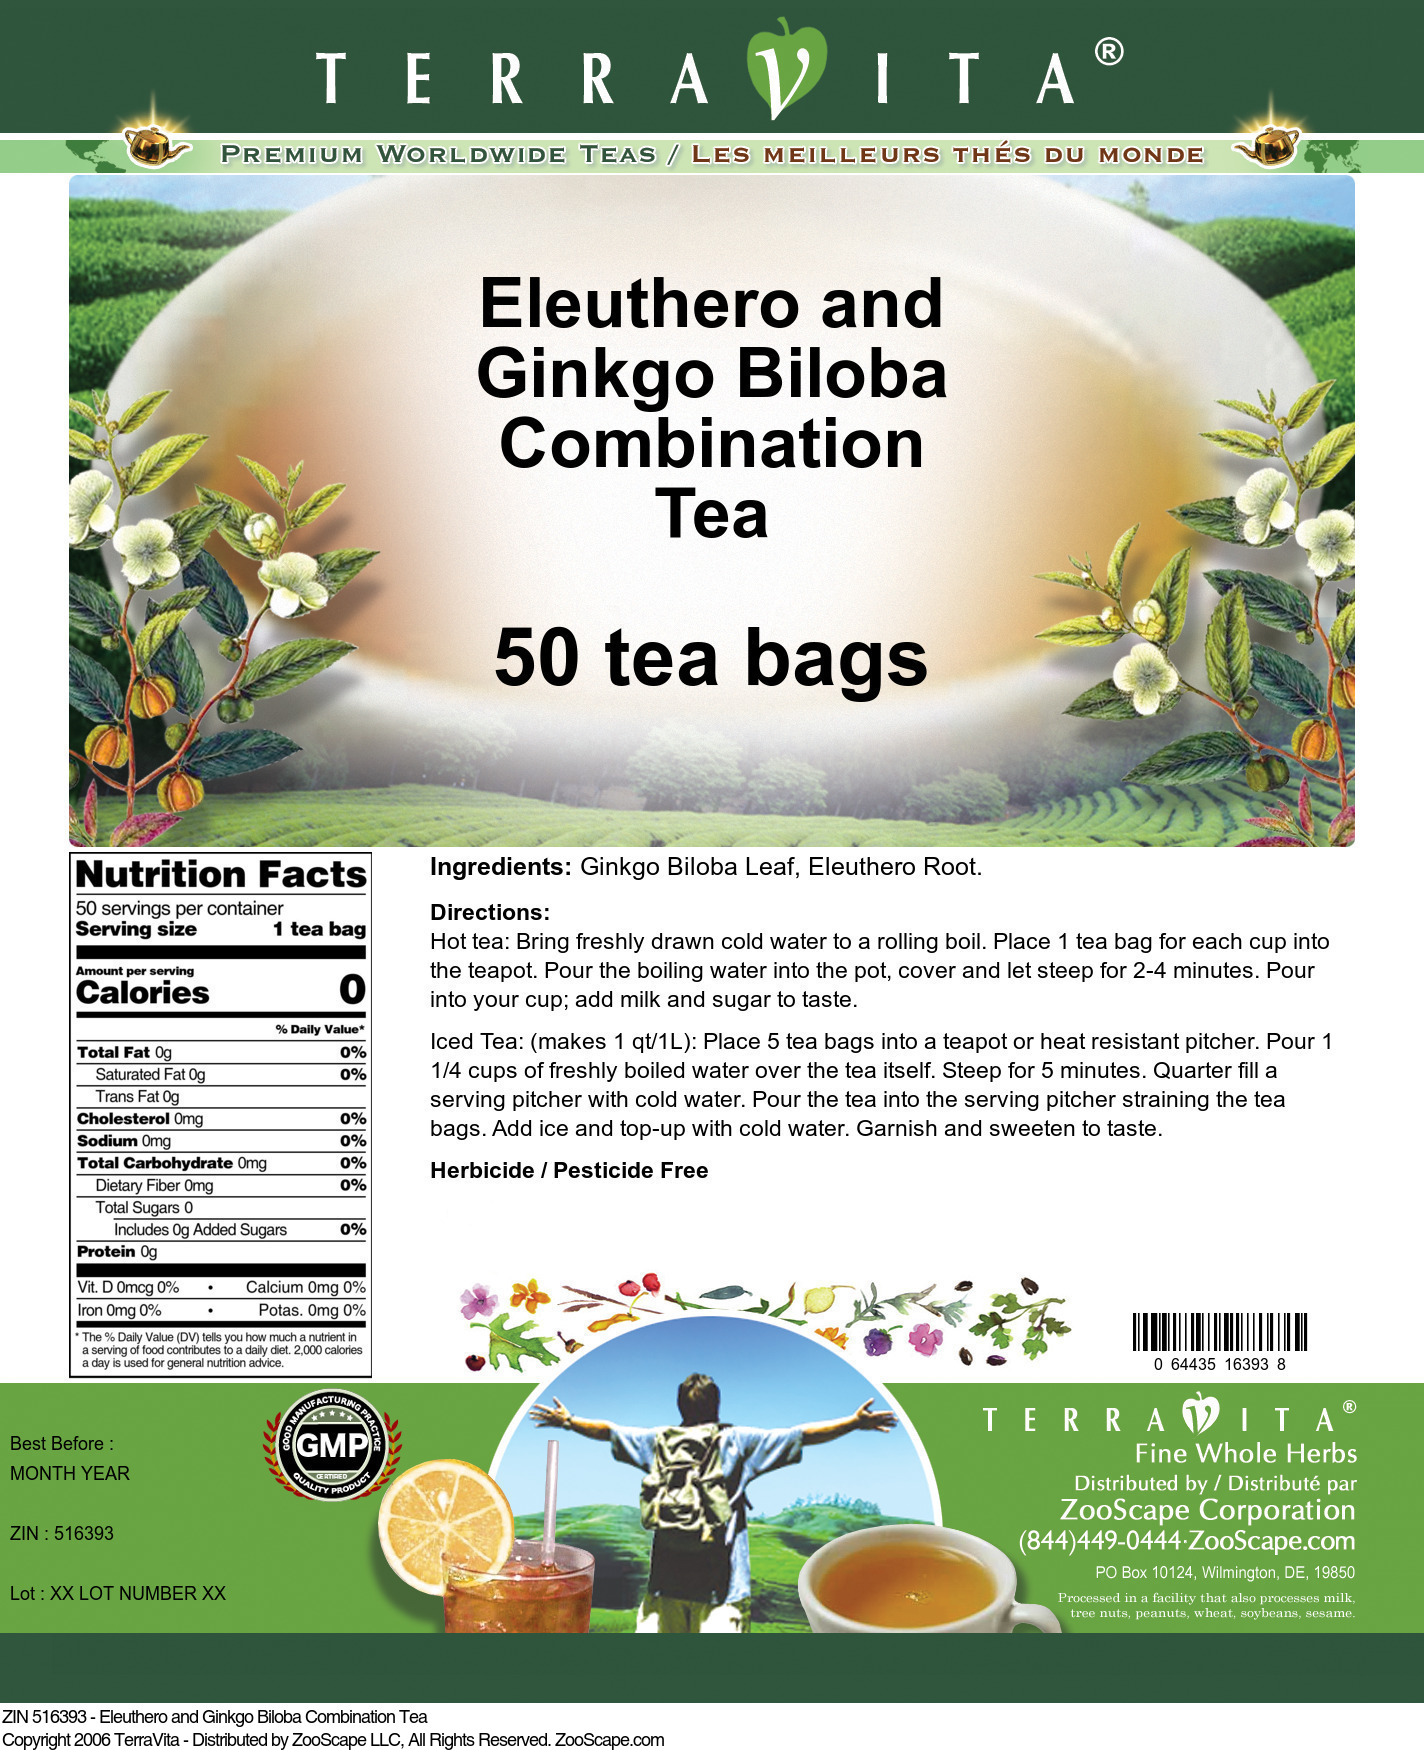 Eleuthero and Ginkgo Biloba Combination Tea - Label